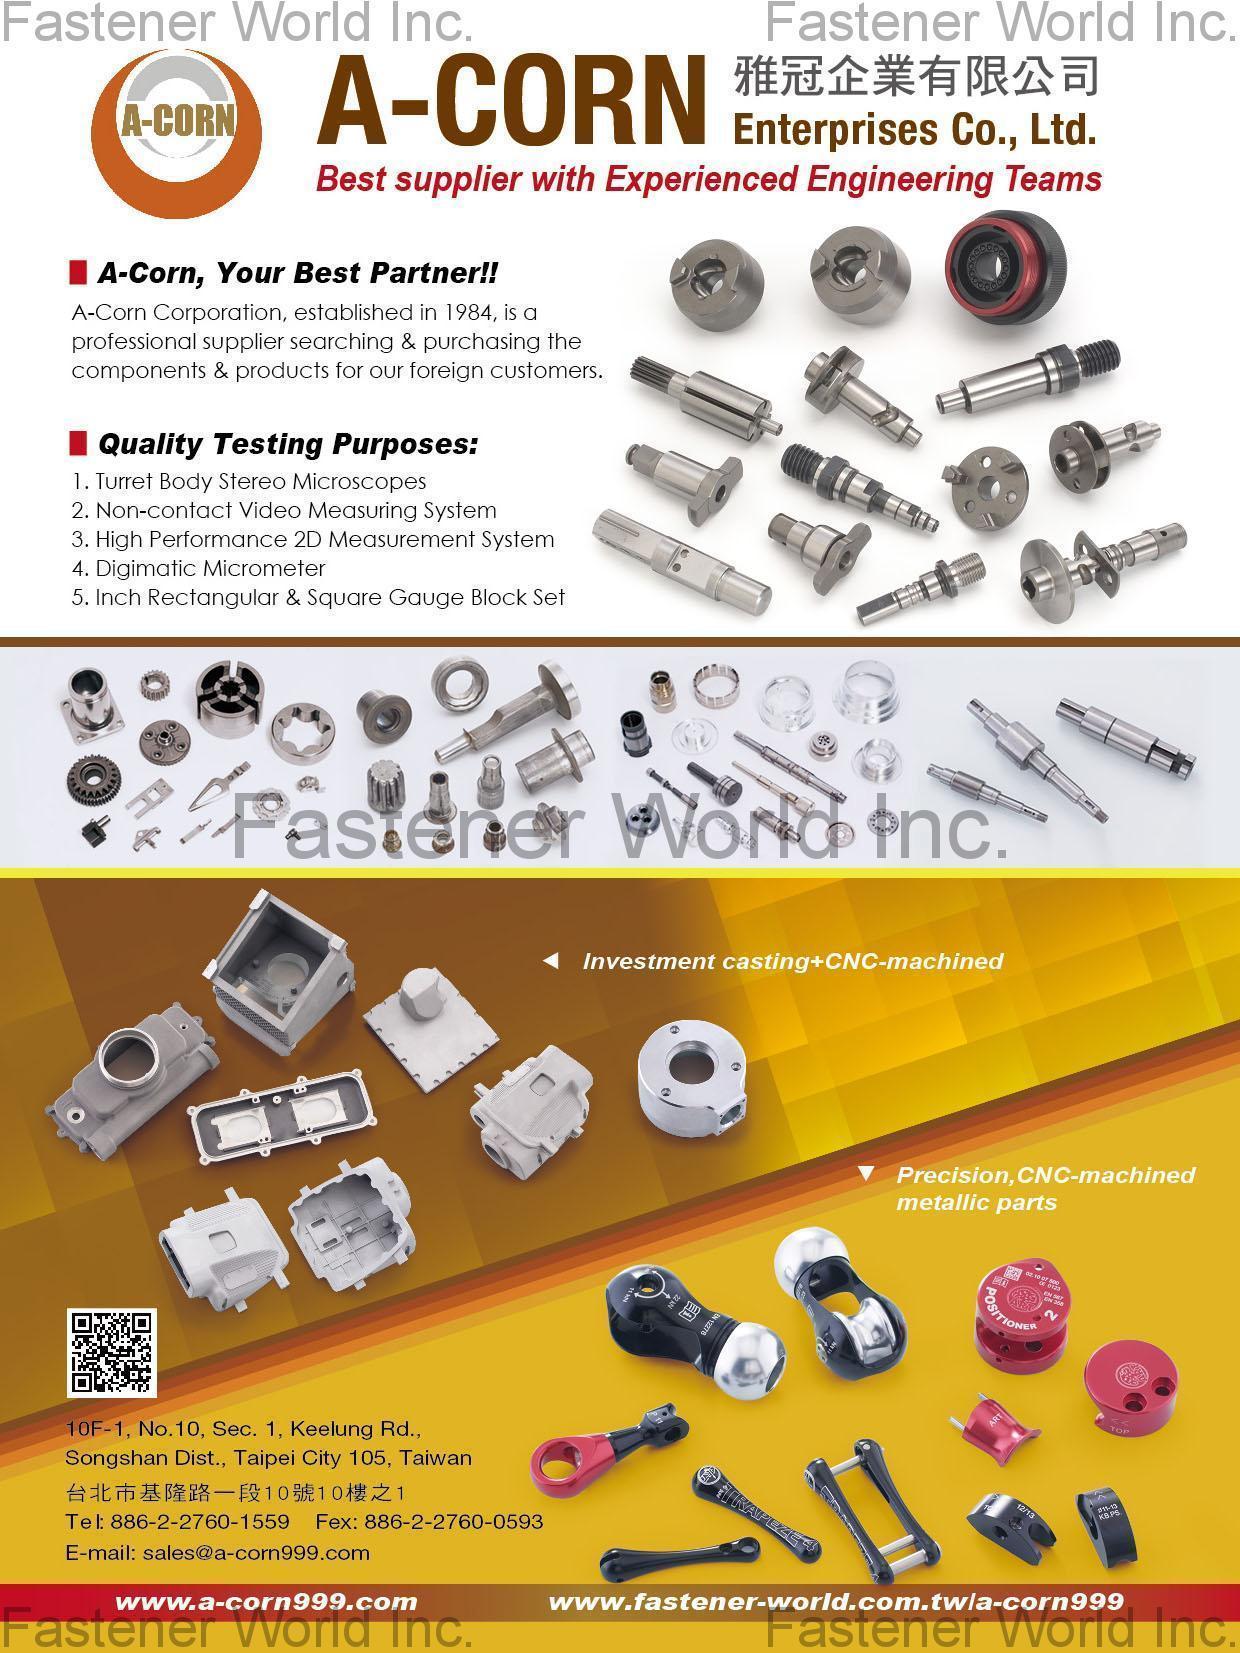 A-CORN ENTERPRISES CO., LTD. , Investment Casting + CNC-machined, Precision, CNC-machined metallic parts , Pneumatic Components